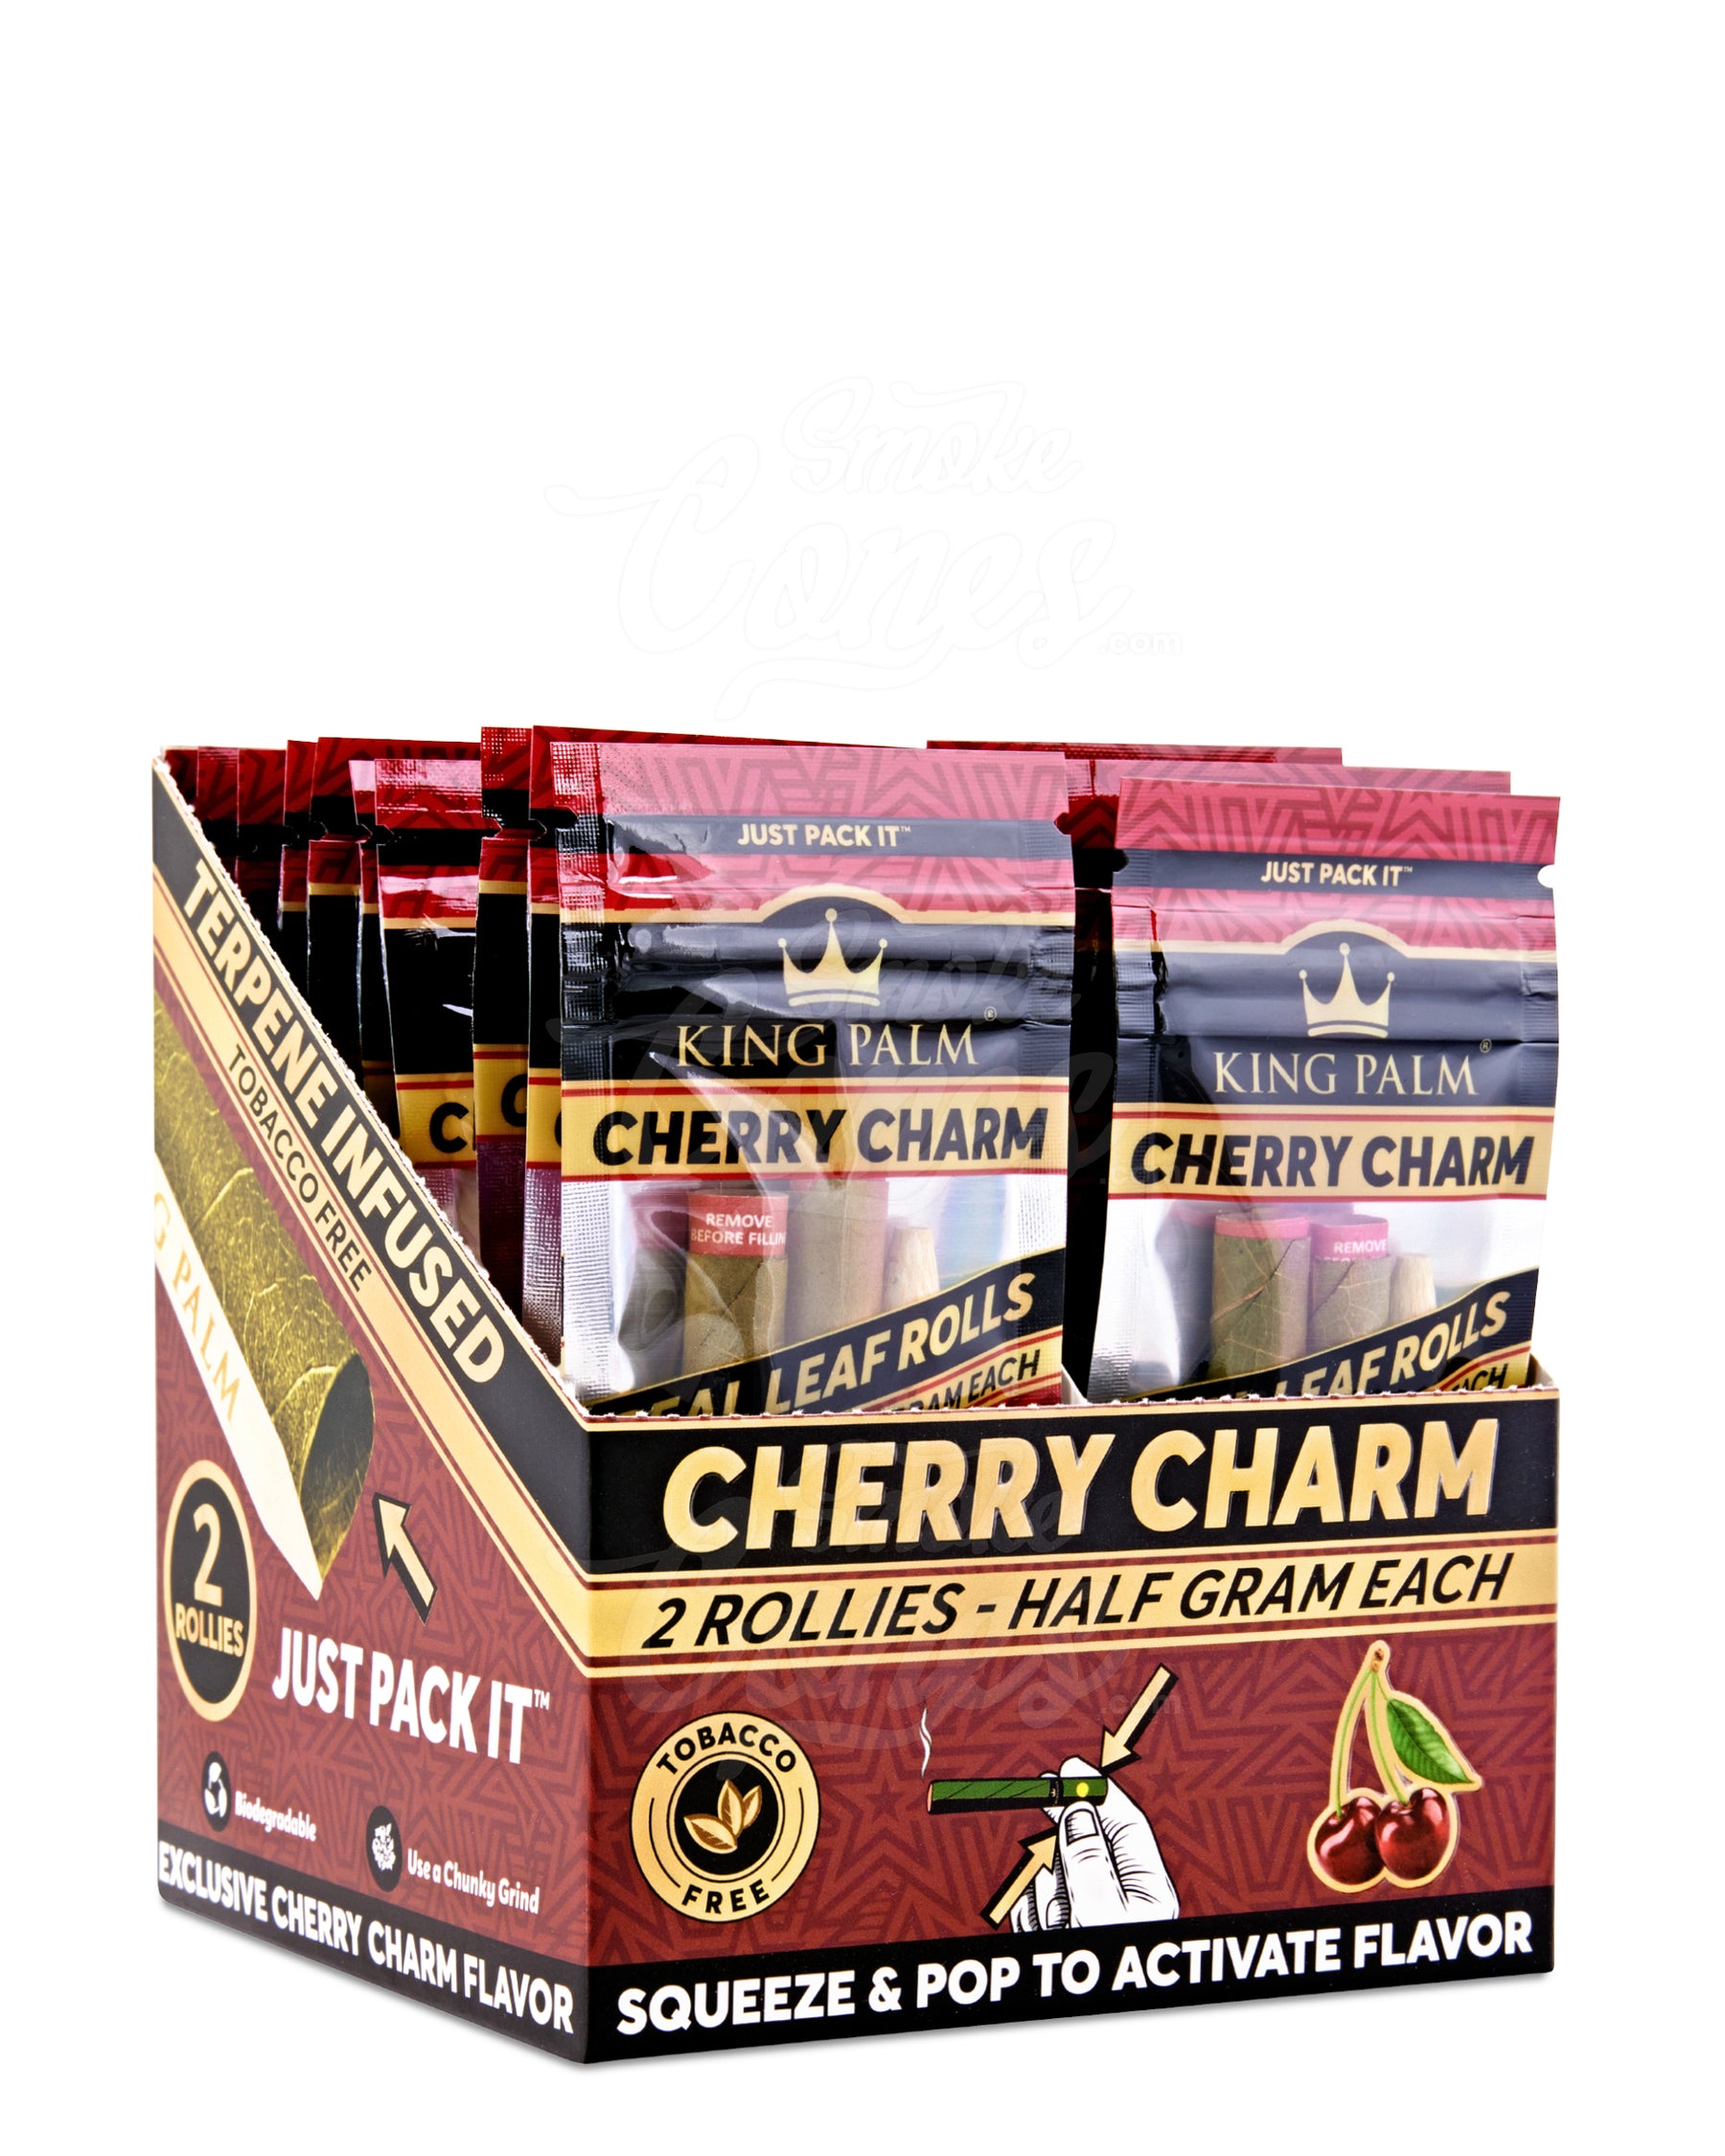 King Palm Cherry Charm Natural Rollie Leaf Blunt Wraps 20/Box - 1